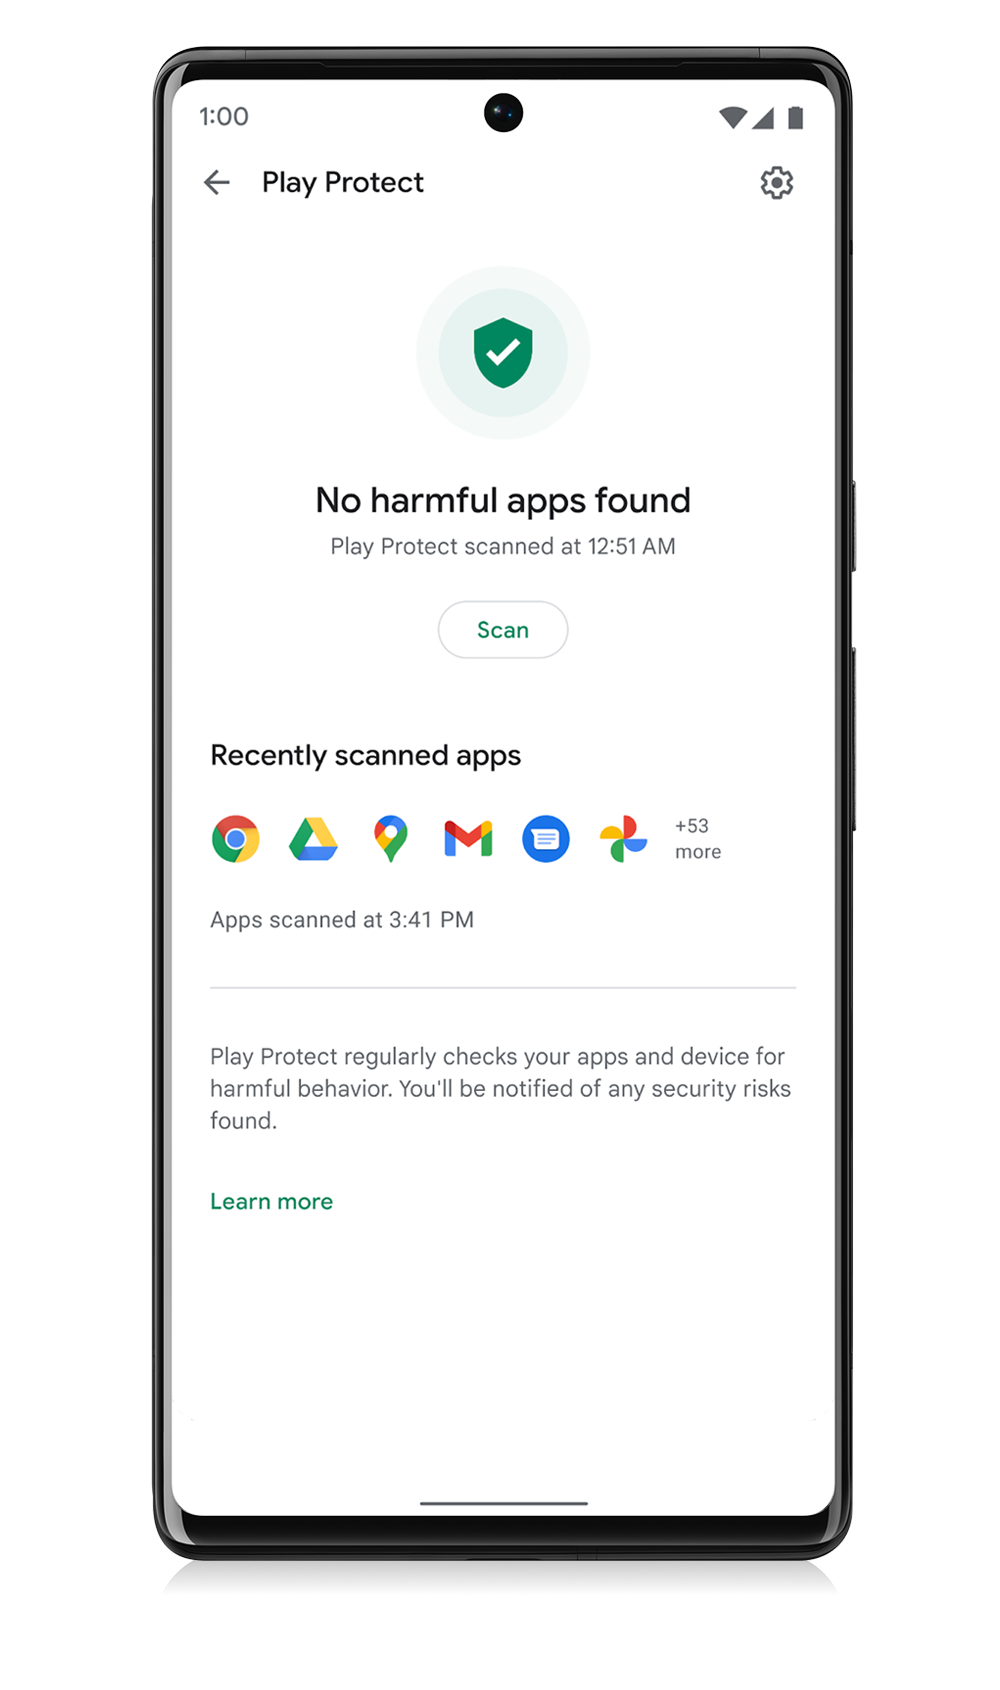 Portal do Aluno – Apps no Google Play